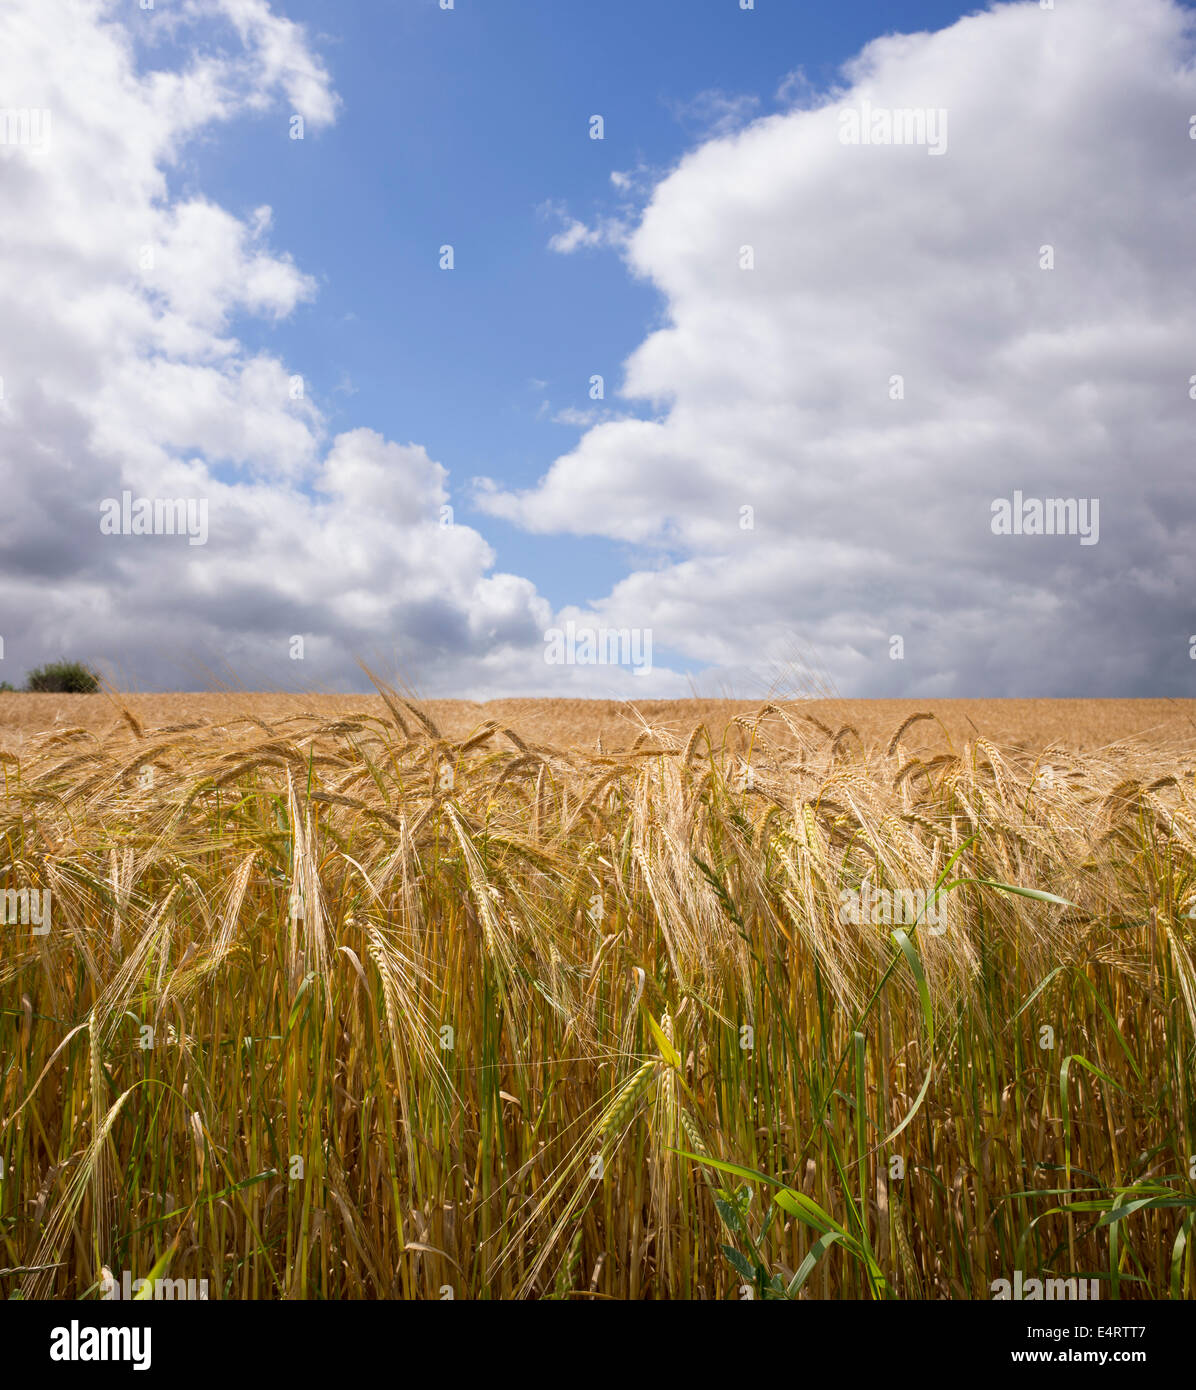 Hordeum vulgare. Barley field against a cloudy blue sky Stock Photo